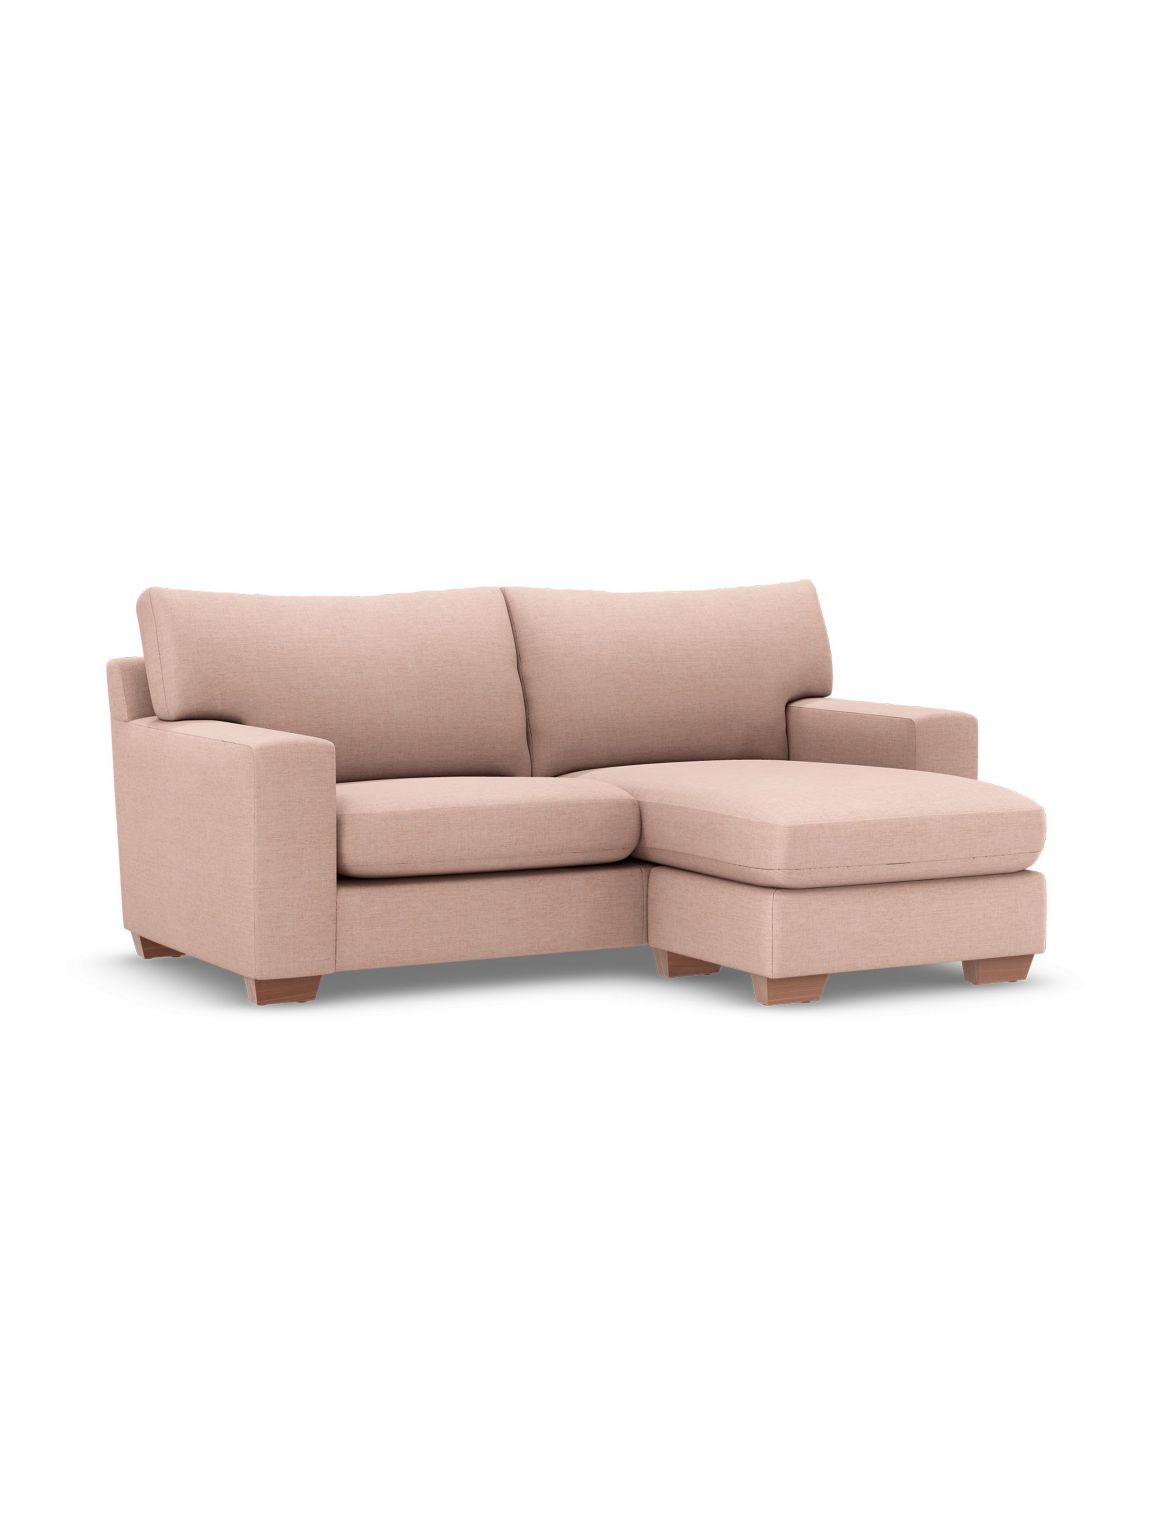 Alfie Corner Chaise Sofa pink